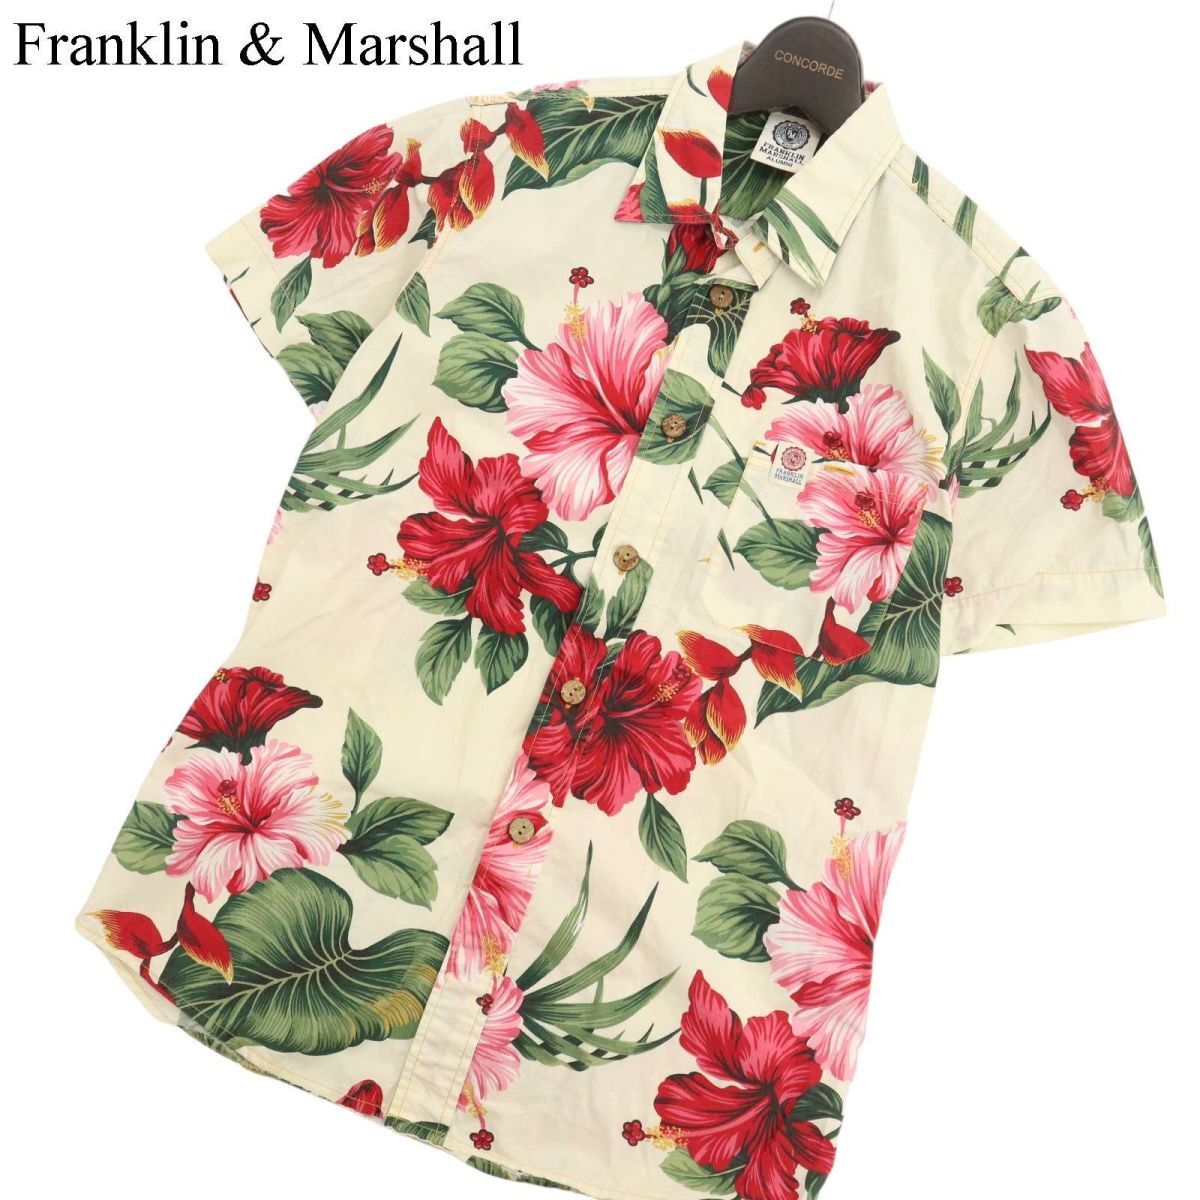 Franklin & Marshall ALUMNI Frank Lynn & Marshall SLIM FIT short sleeves [ floral print flower total pattern ] aloha shirt Sz.S men's C4T04028_4#A